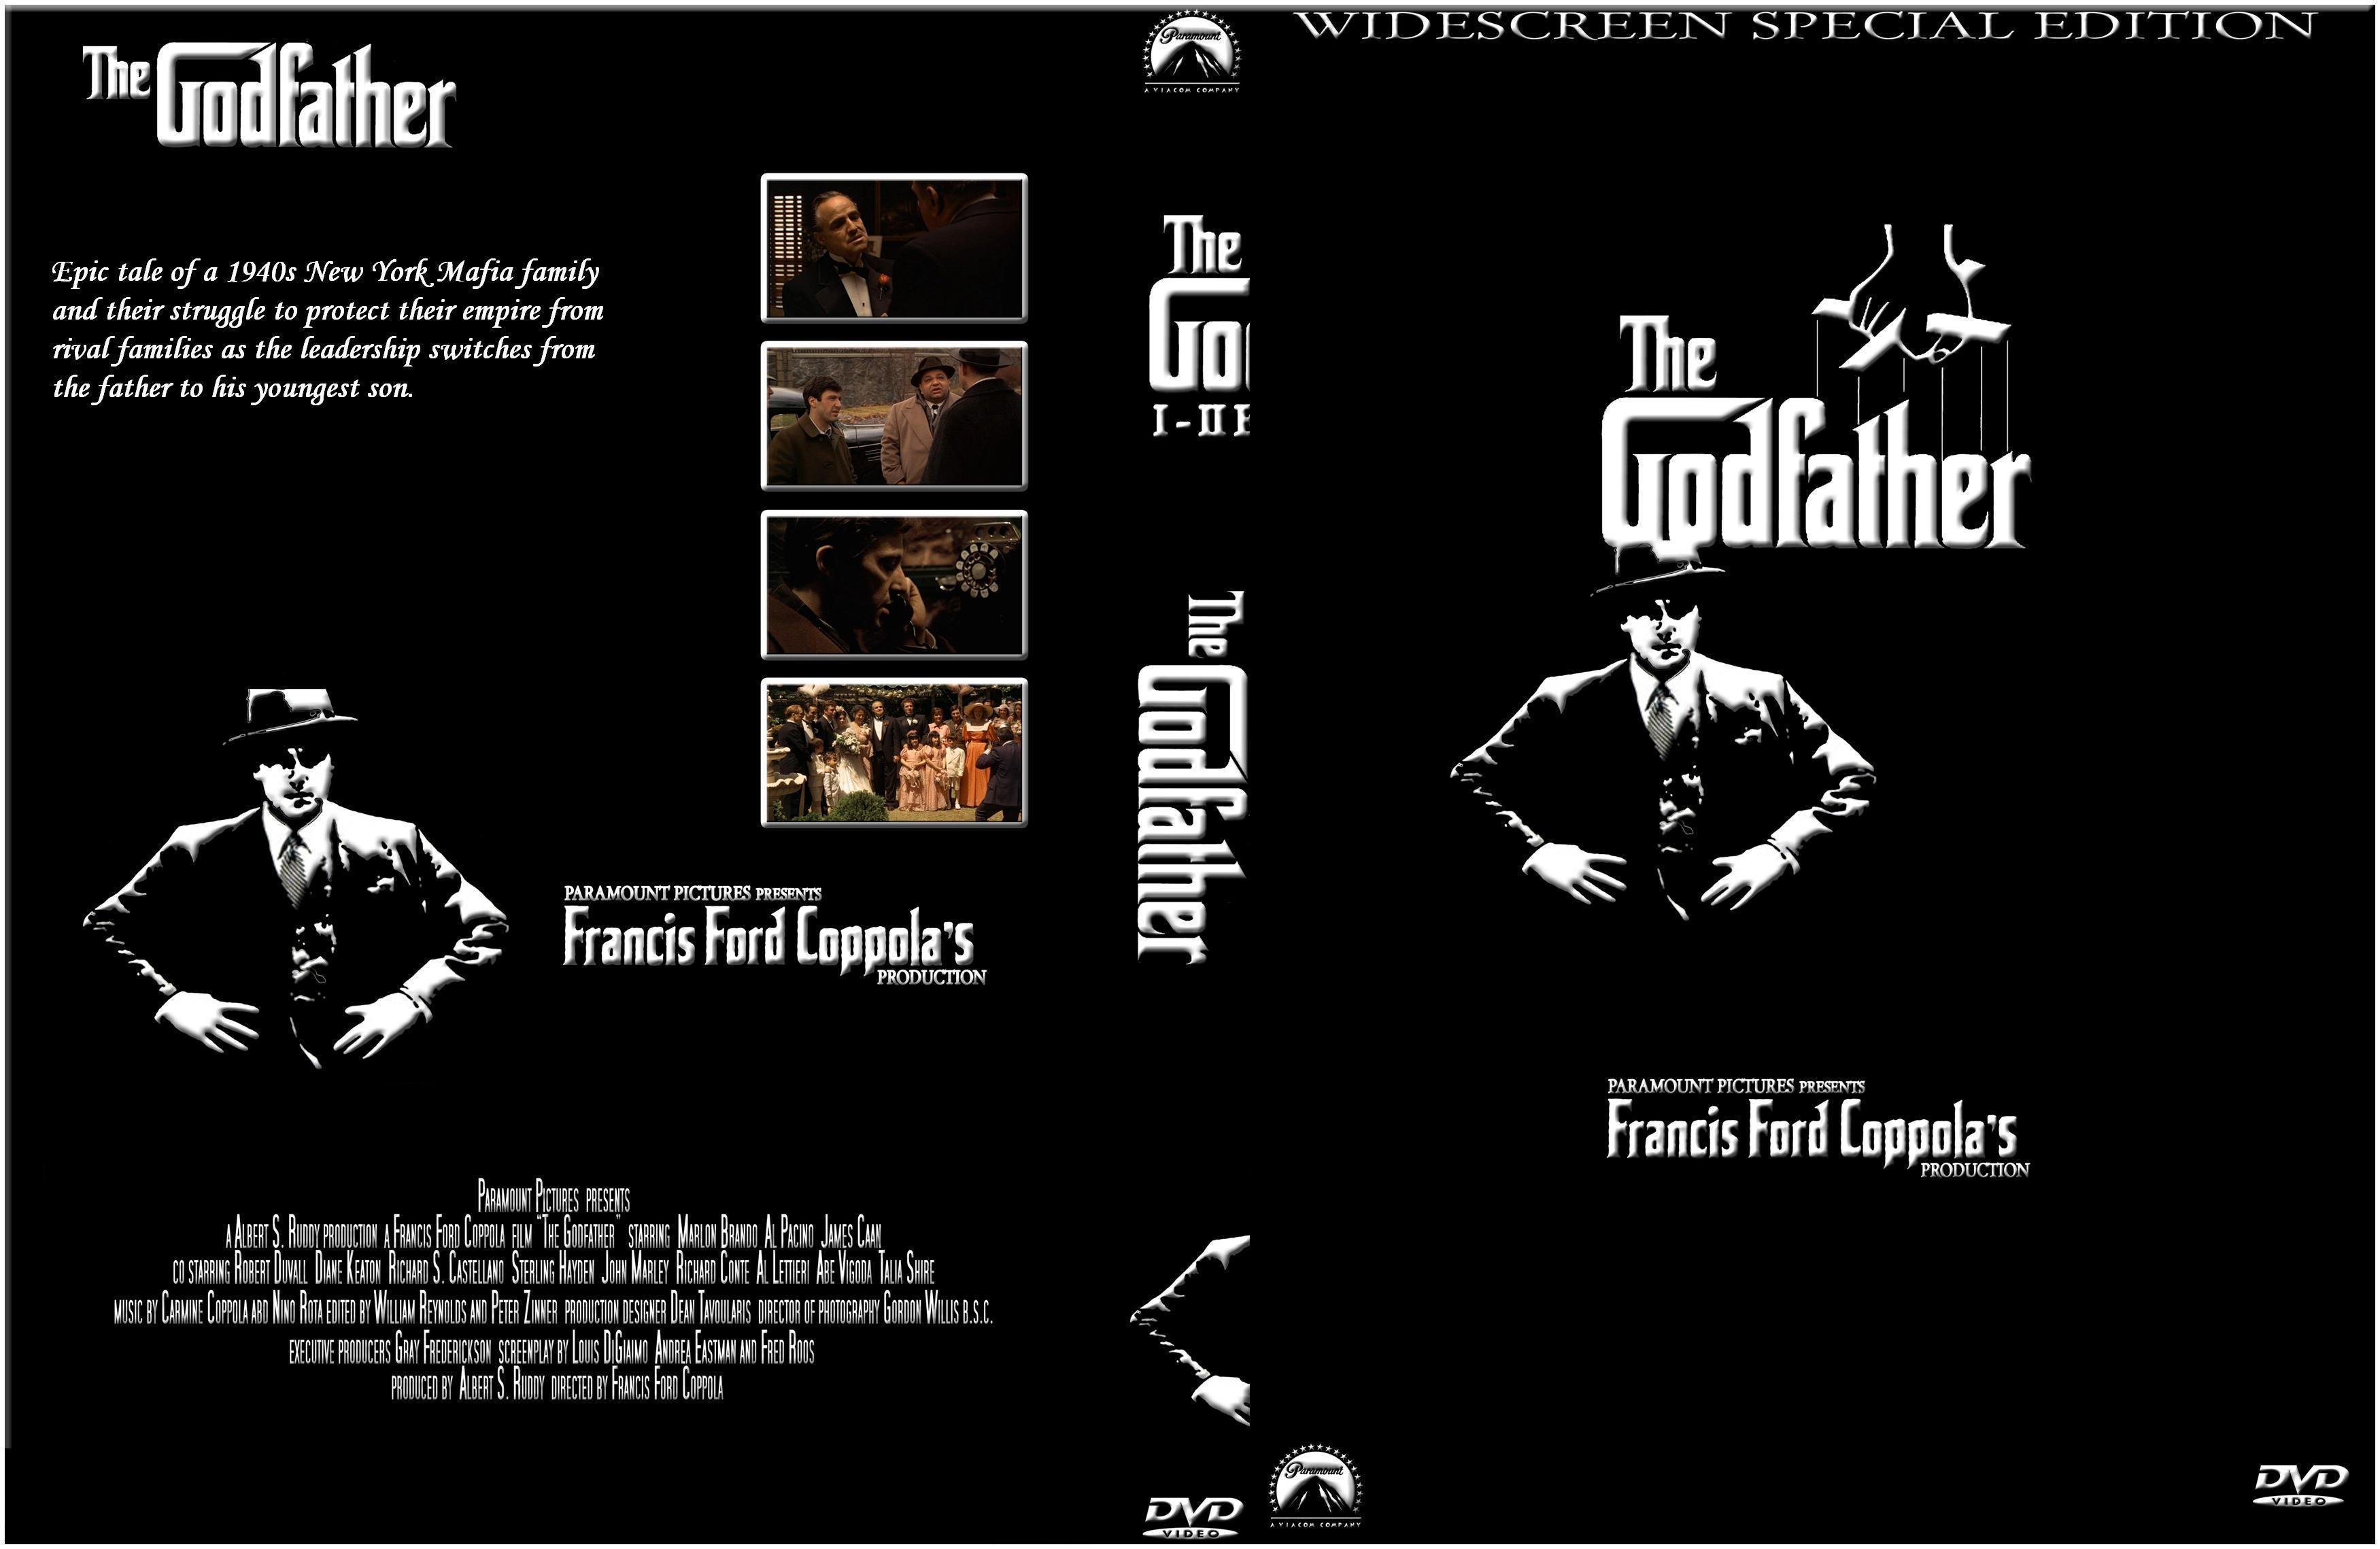 The Godfather 1-3 boxset